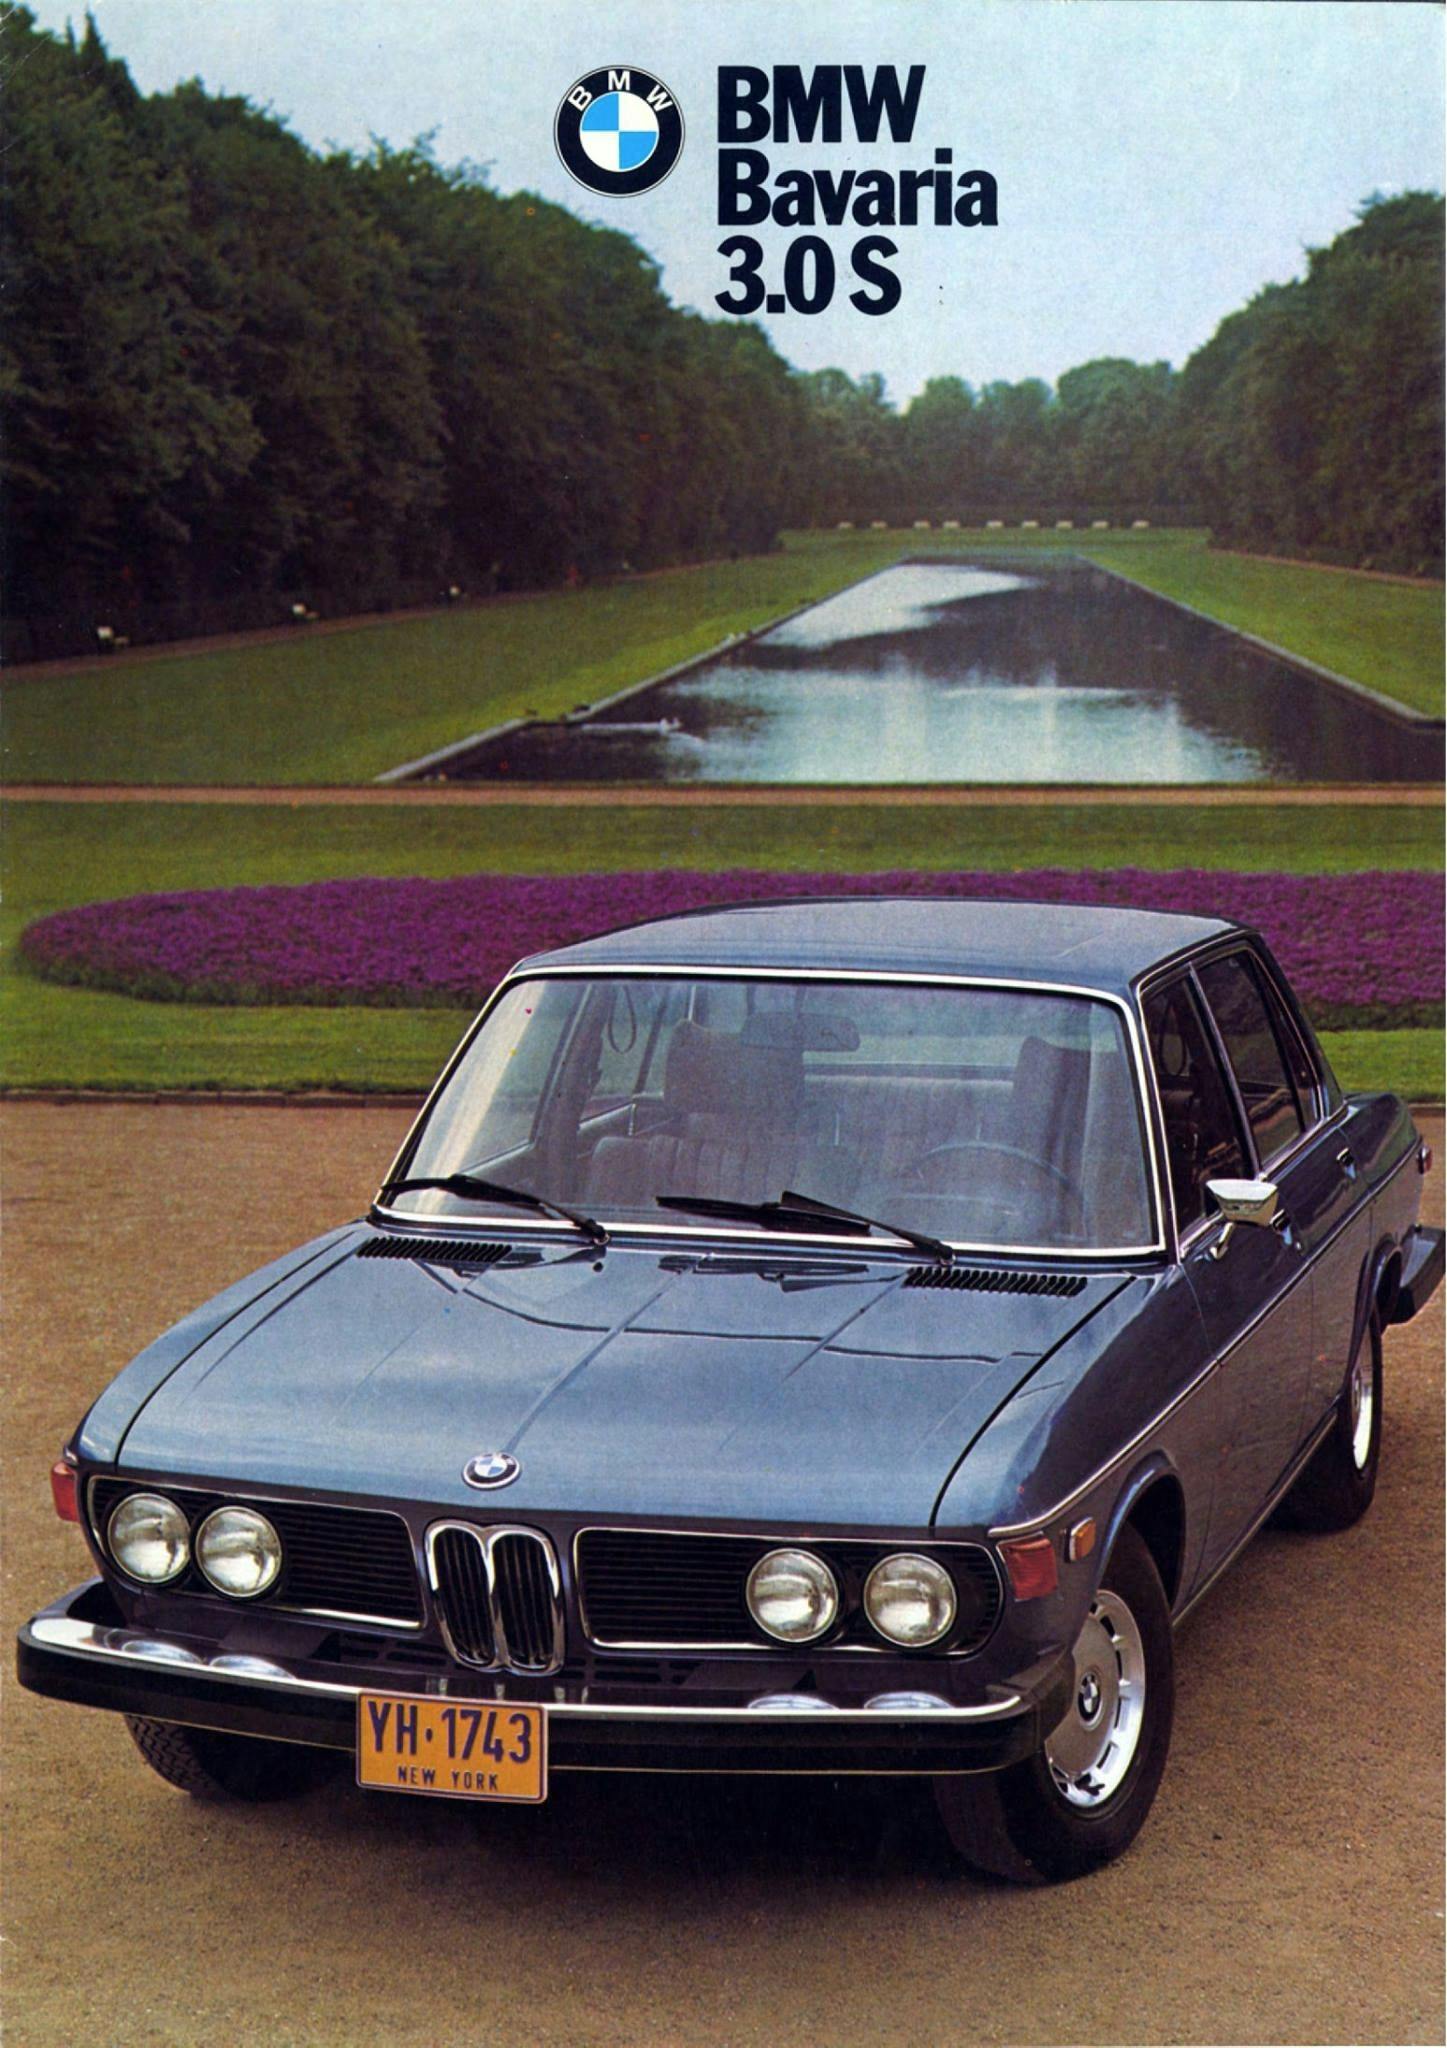 BMW Bavaria 3.0 S ad